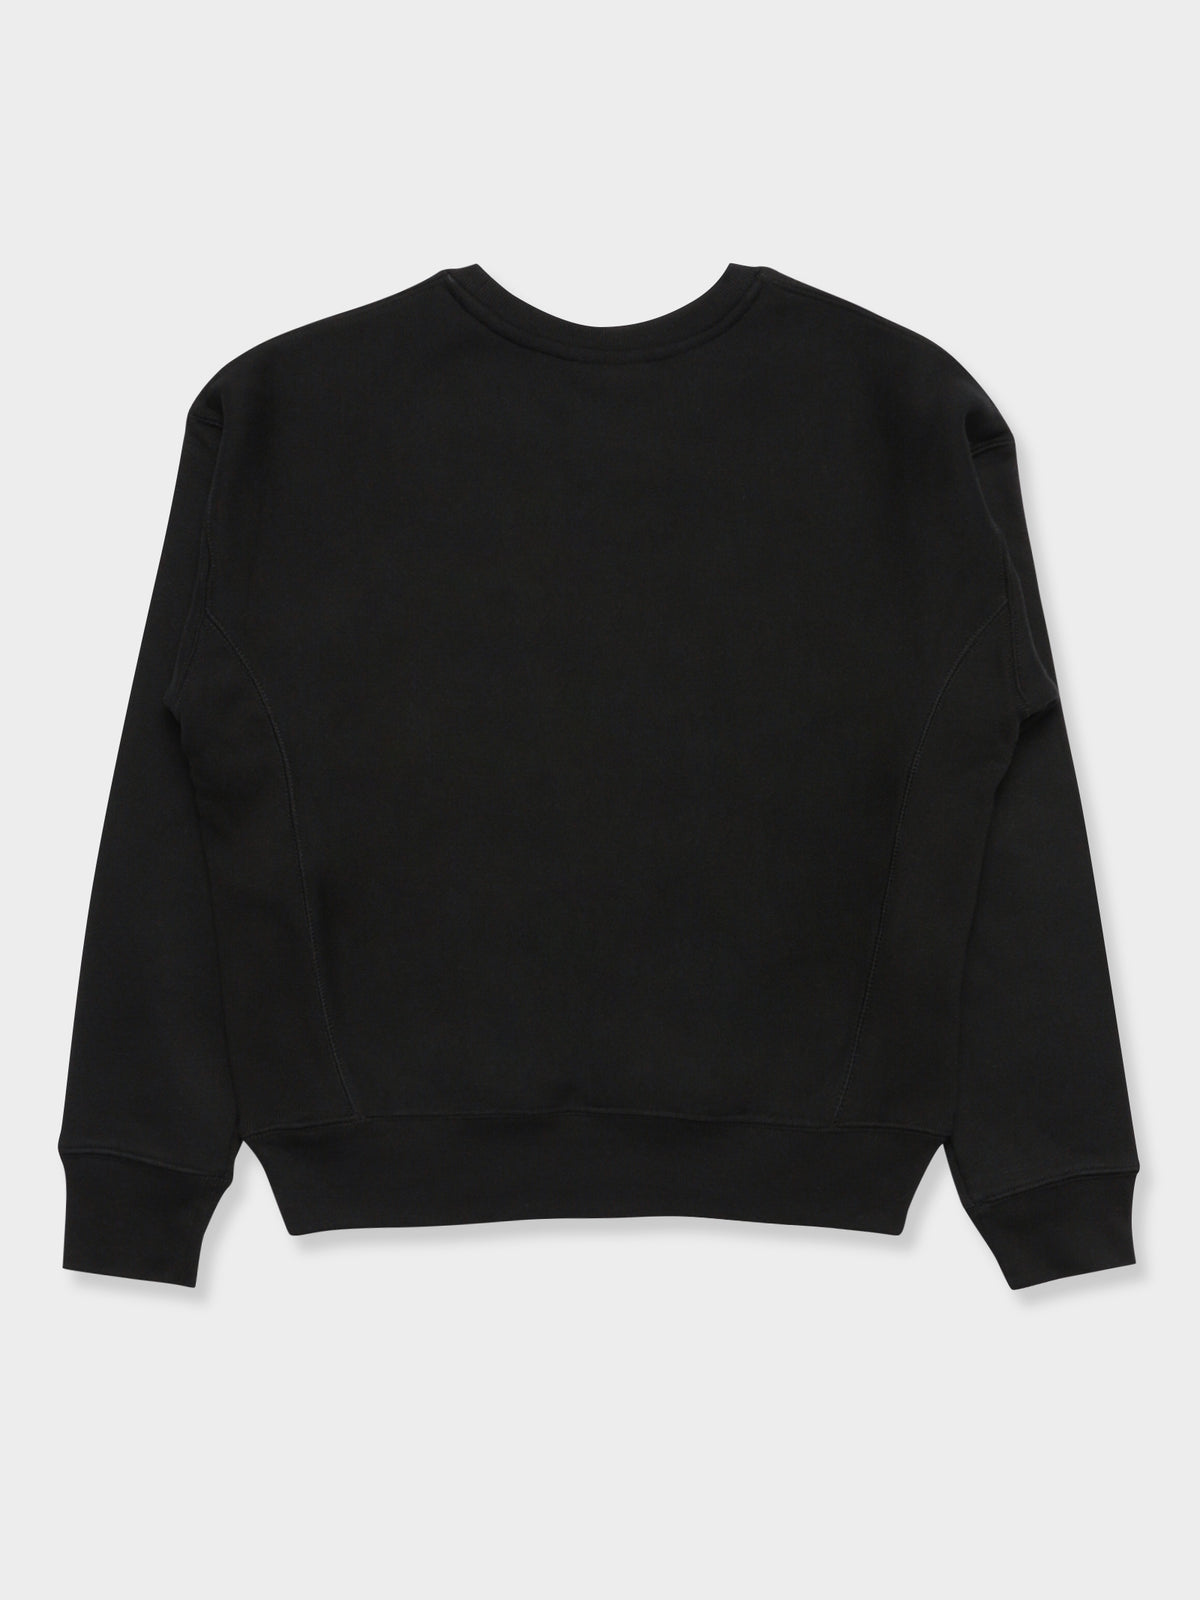 Reverse Weave Crew Sweatshirt in Black